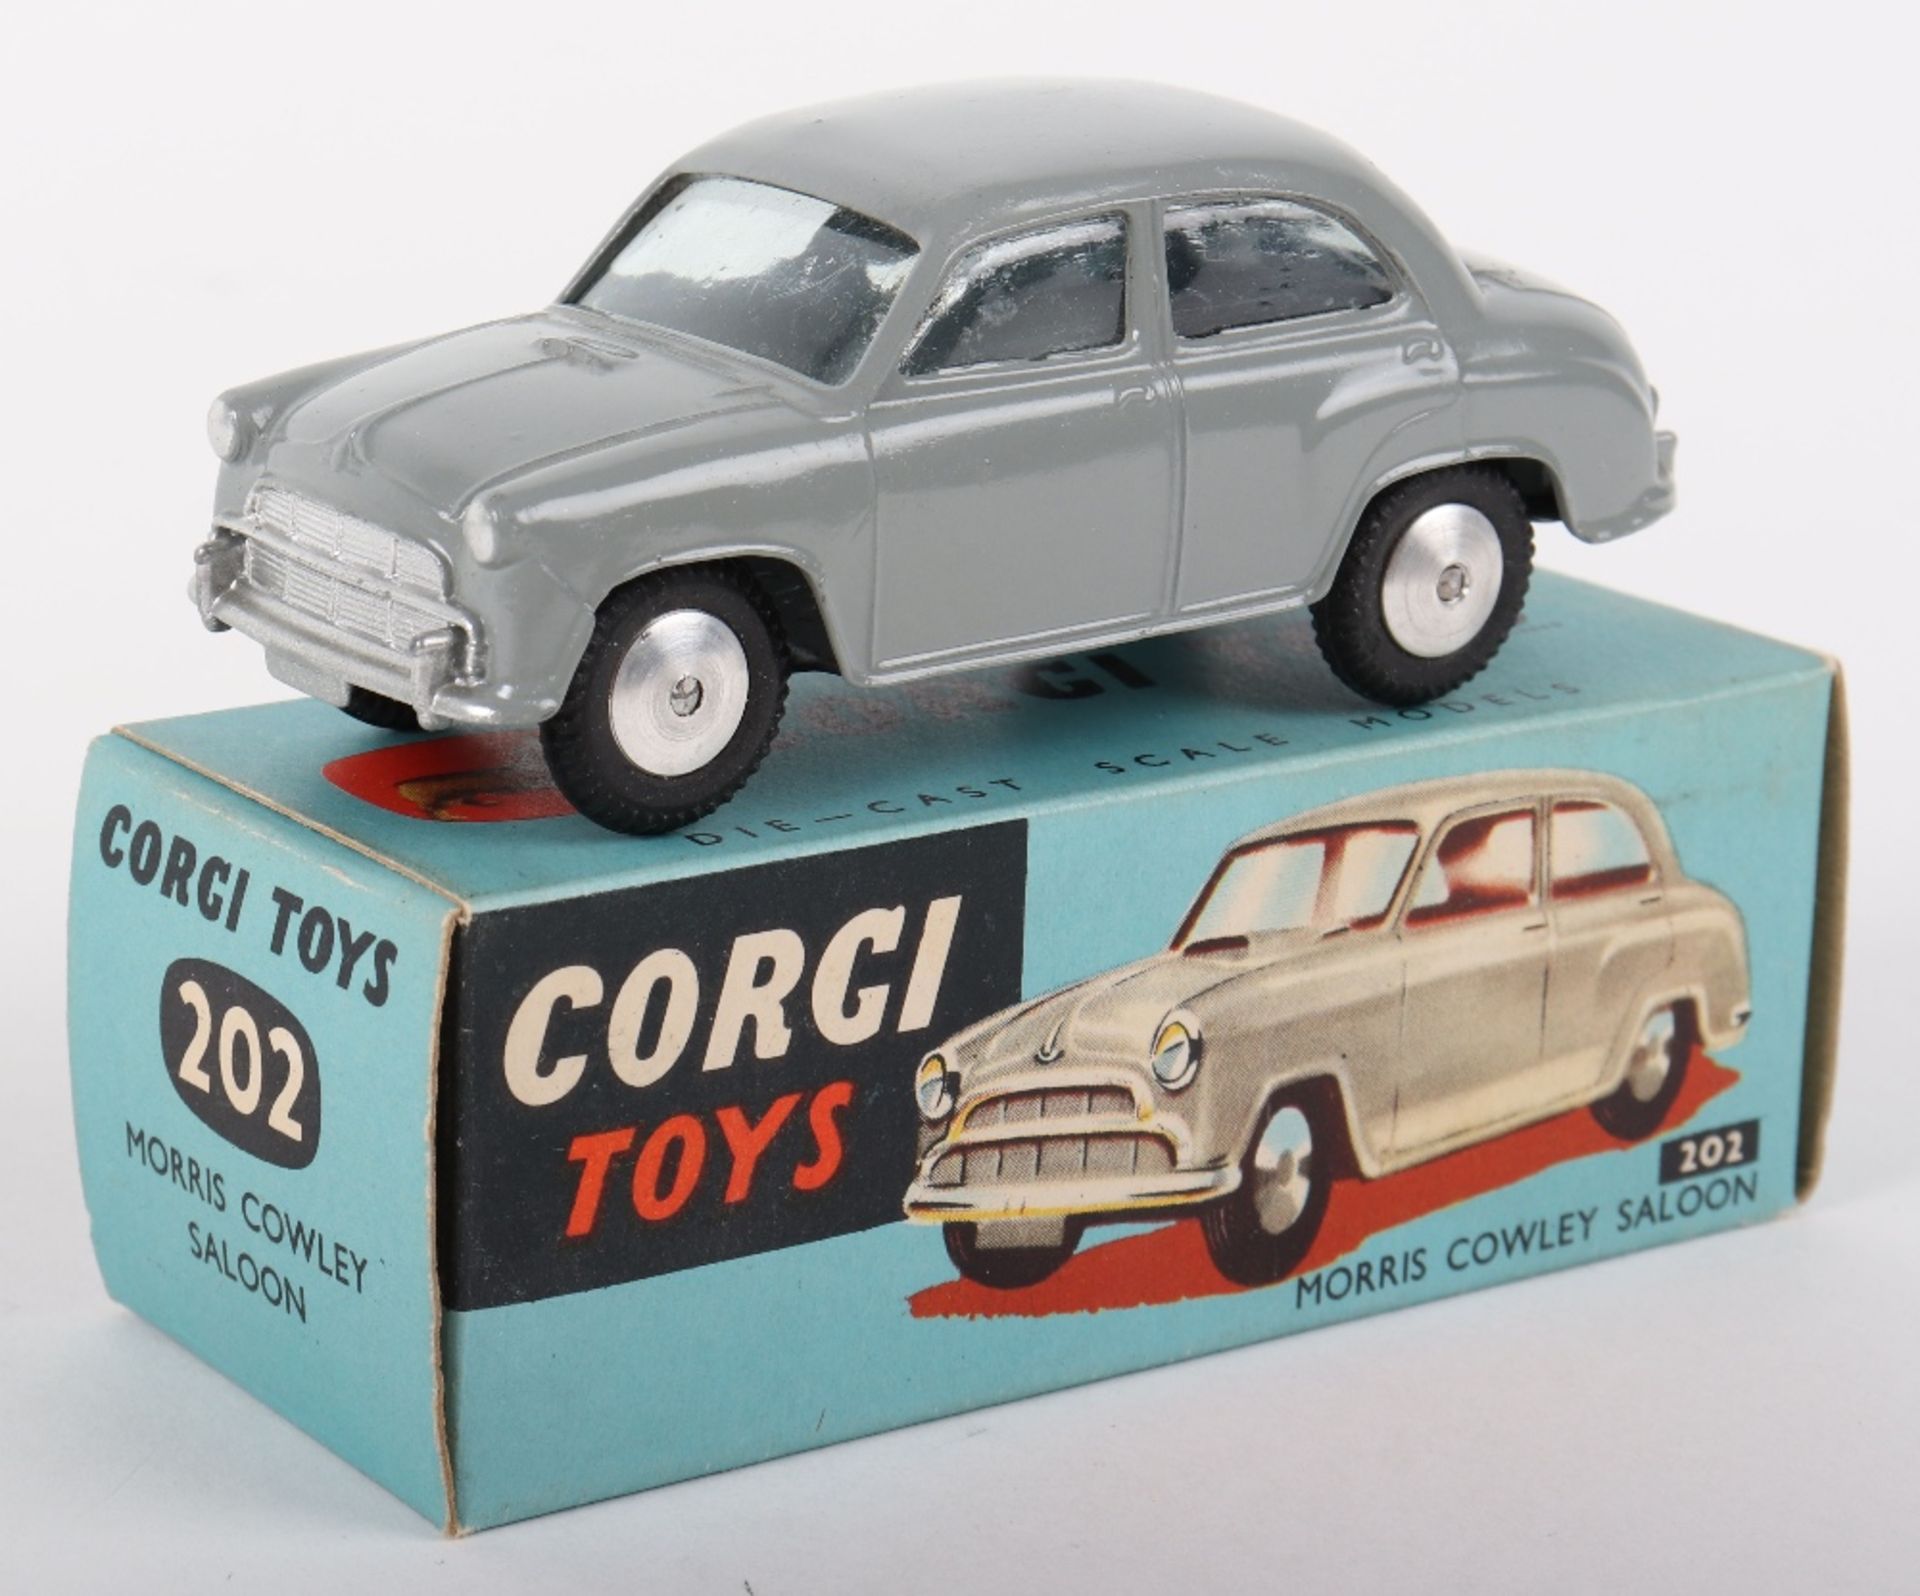 Corgi Toys 202 Morris Cowley Saloon